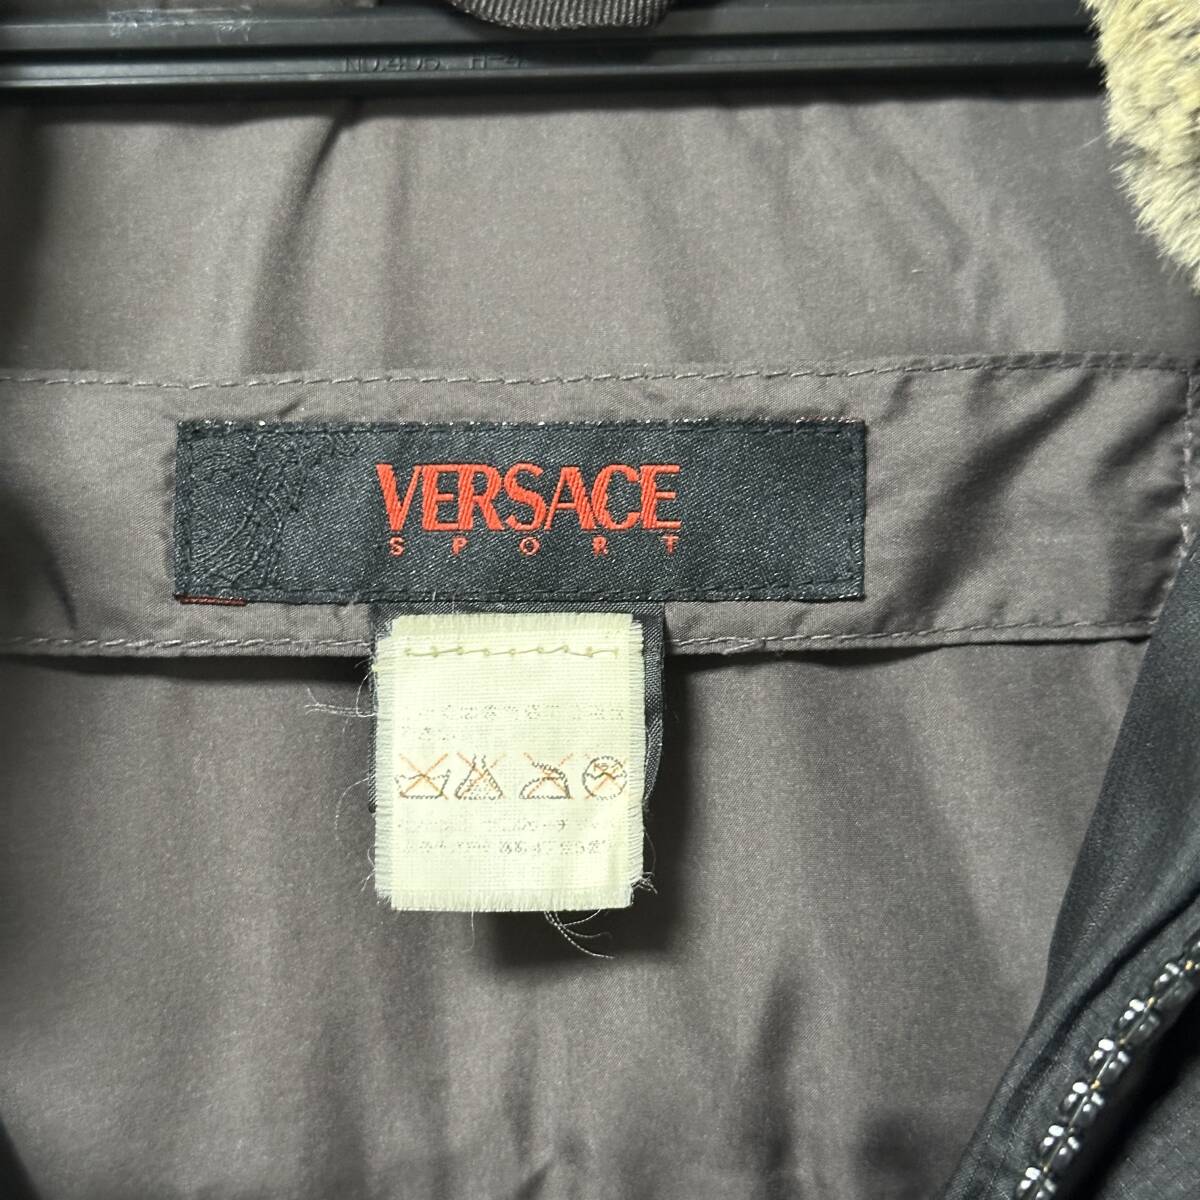  Versace sport VERSACE SPORTS down coat with a hood men's black black size 50 XL corresponding (RF-132)